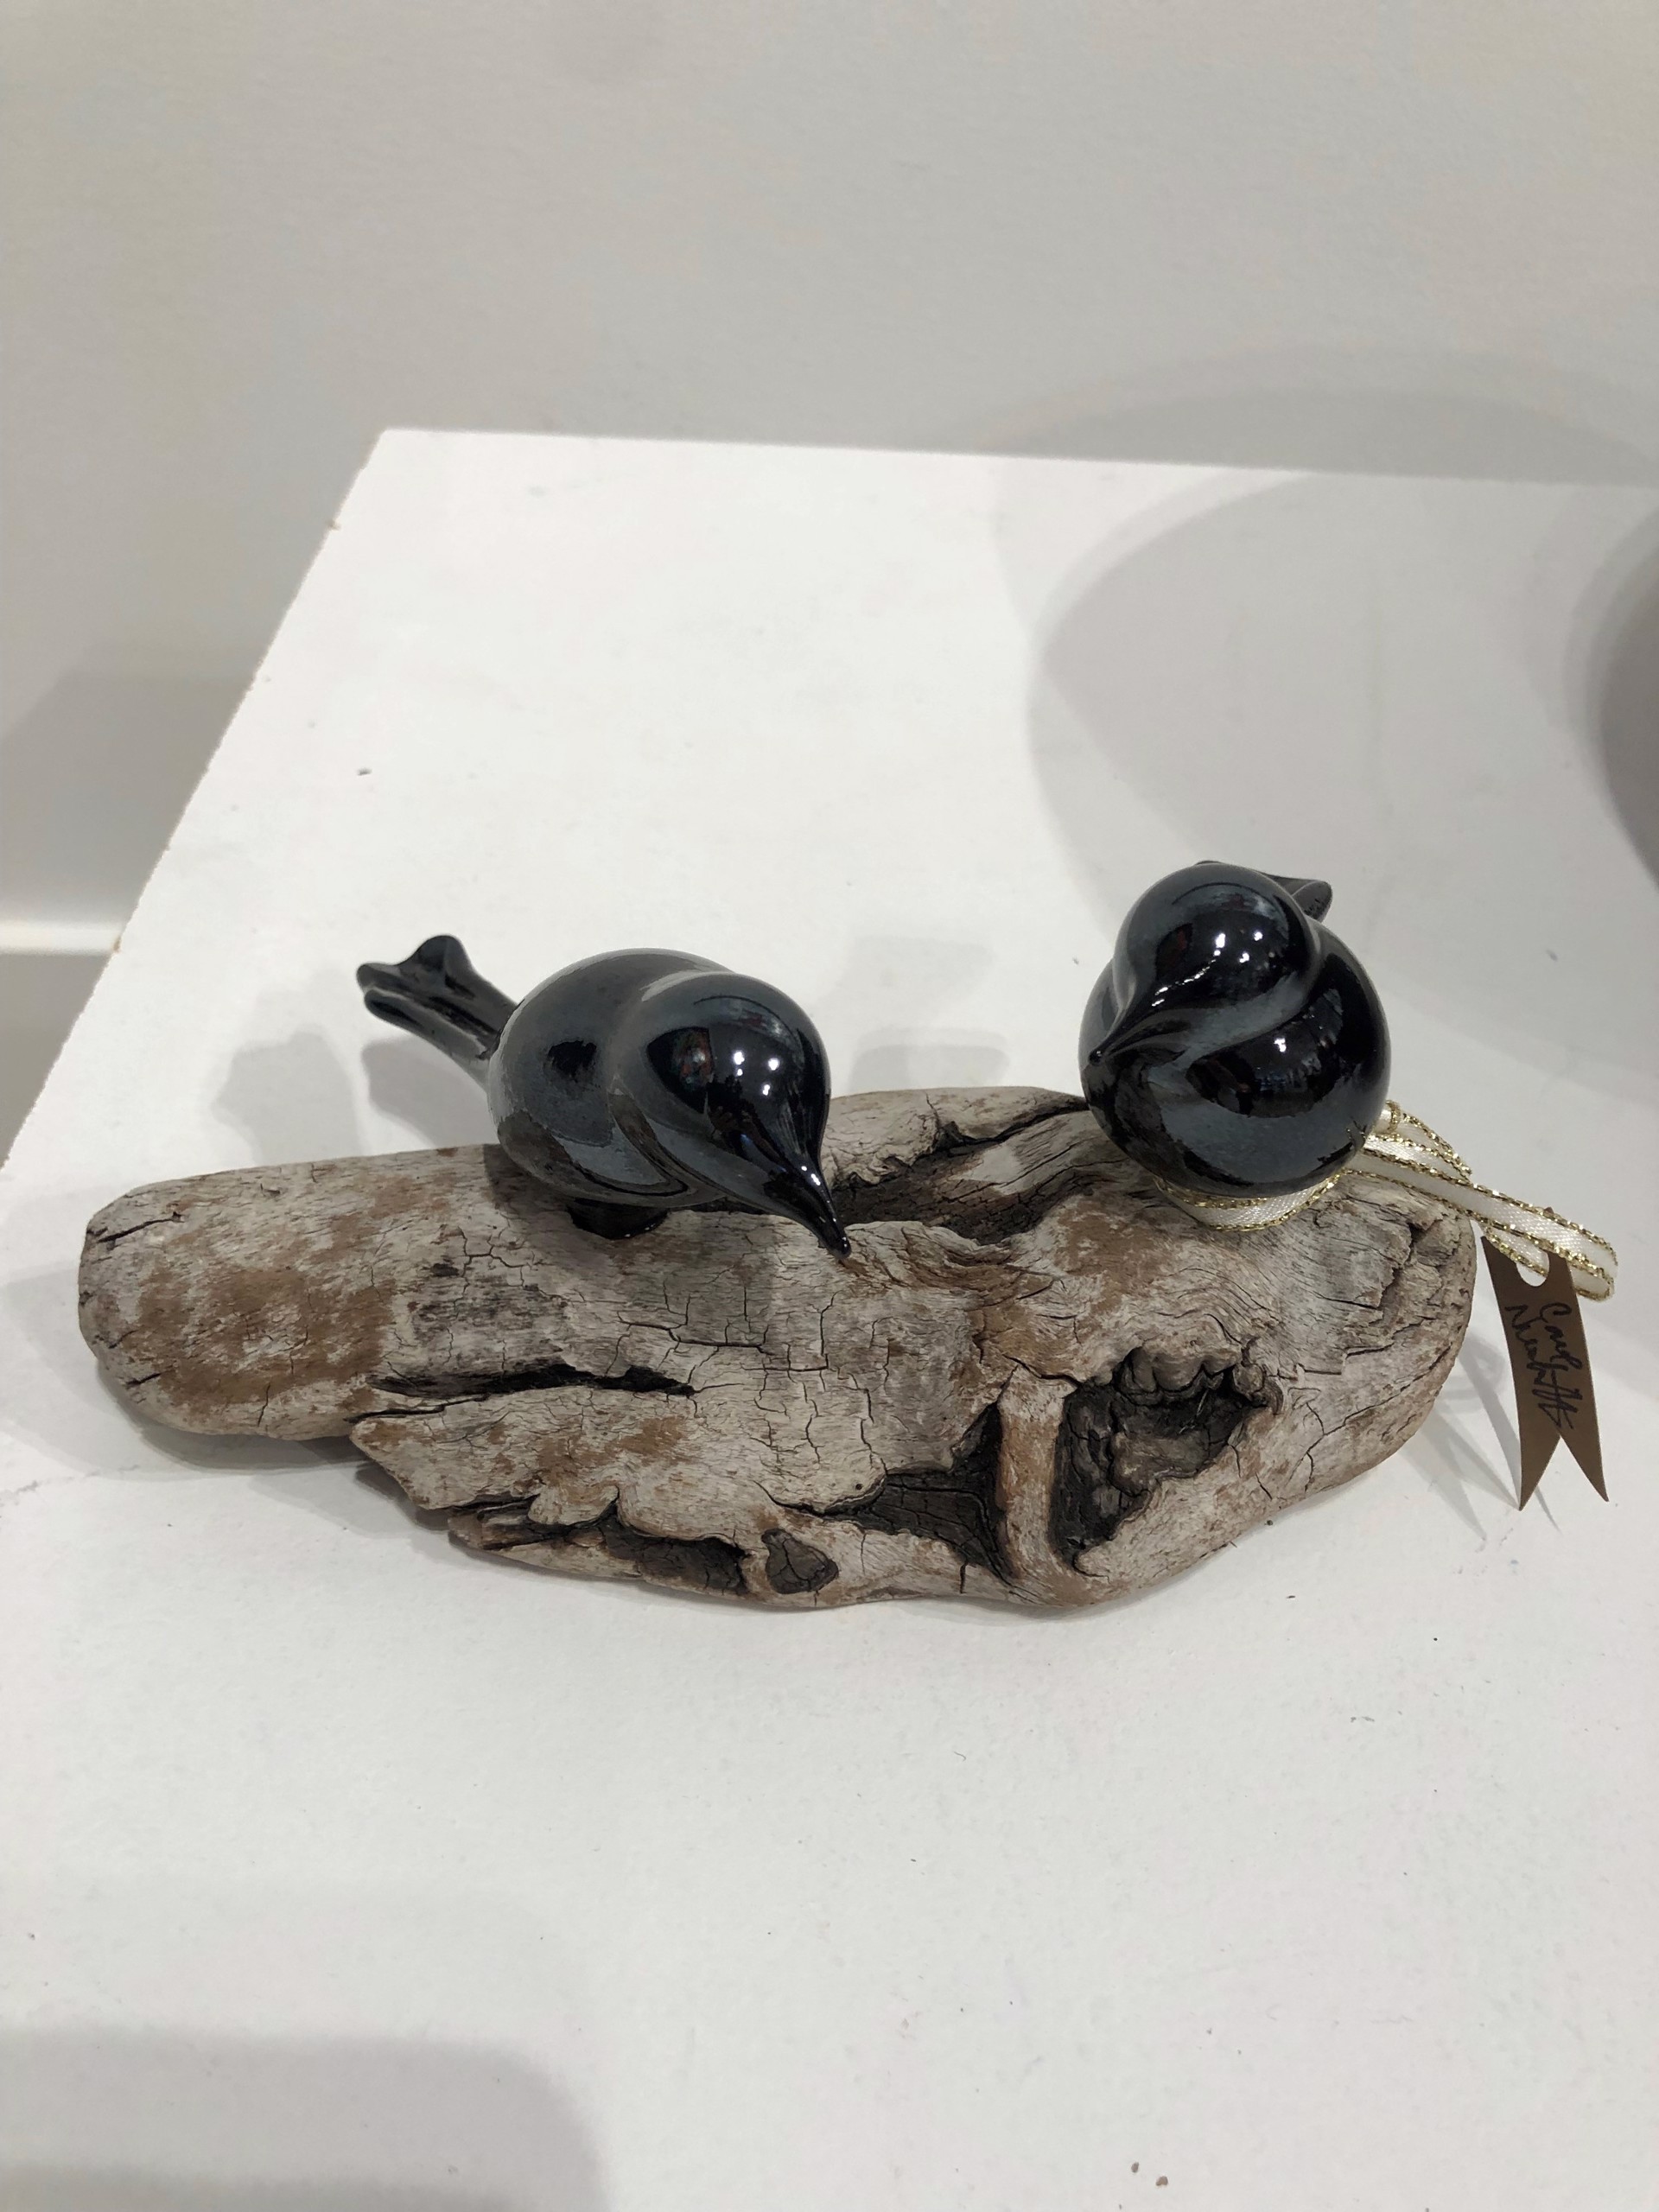 2 Black Birds - 203091 by Carol Nesbitt